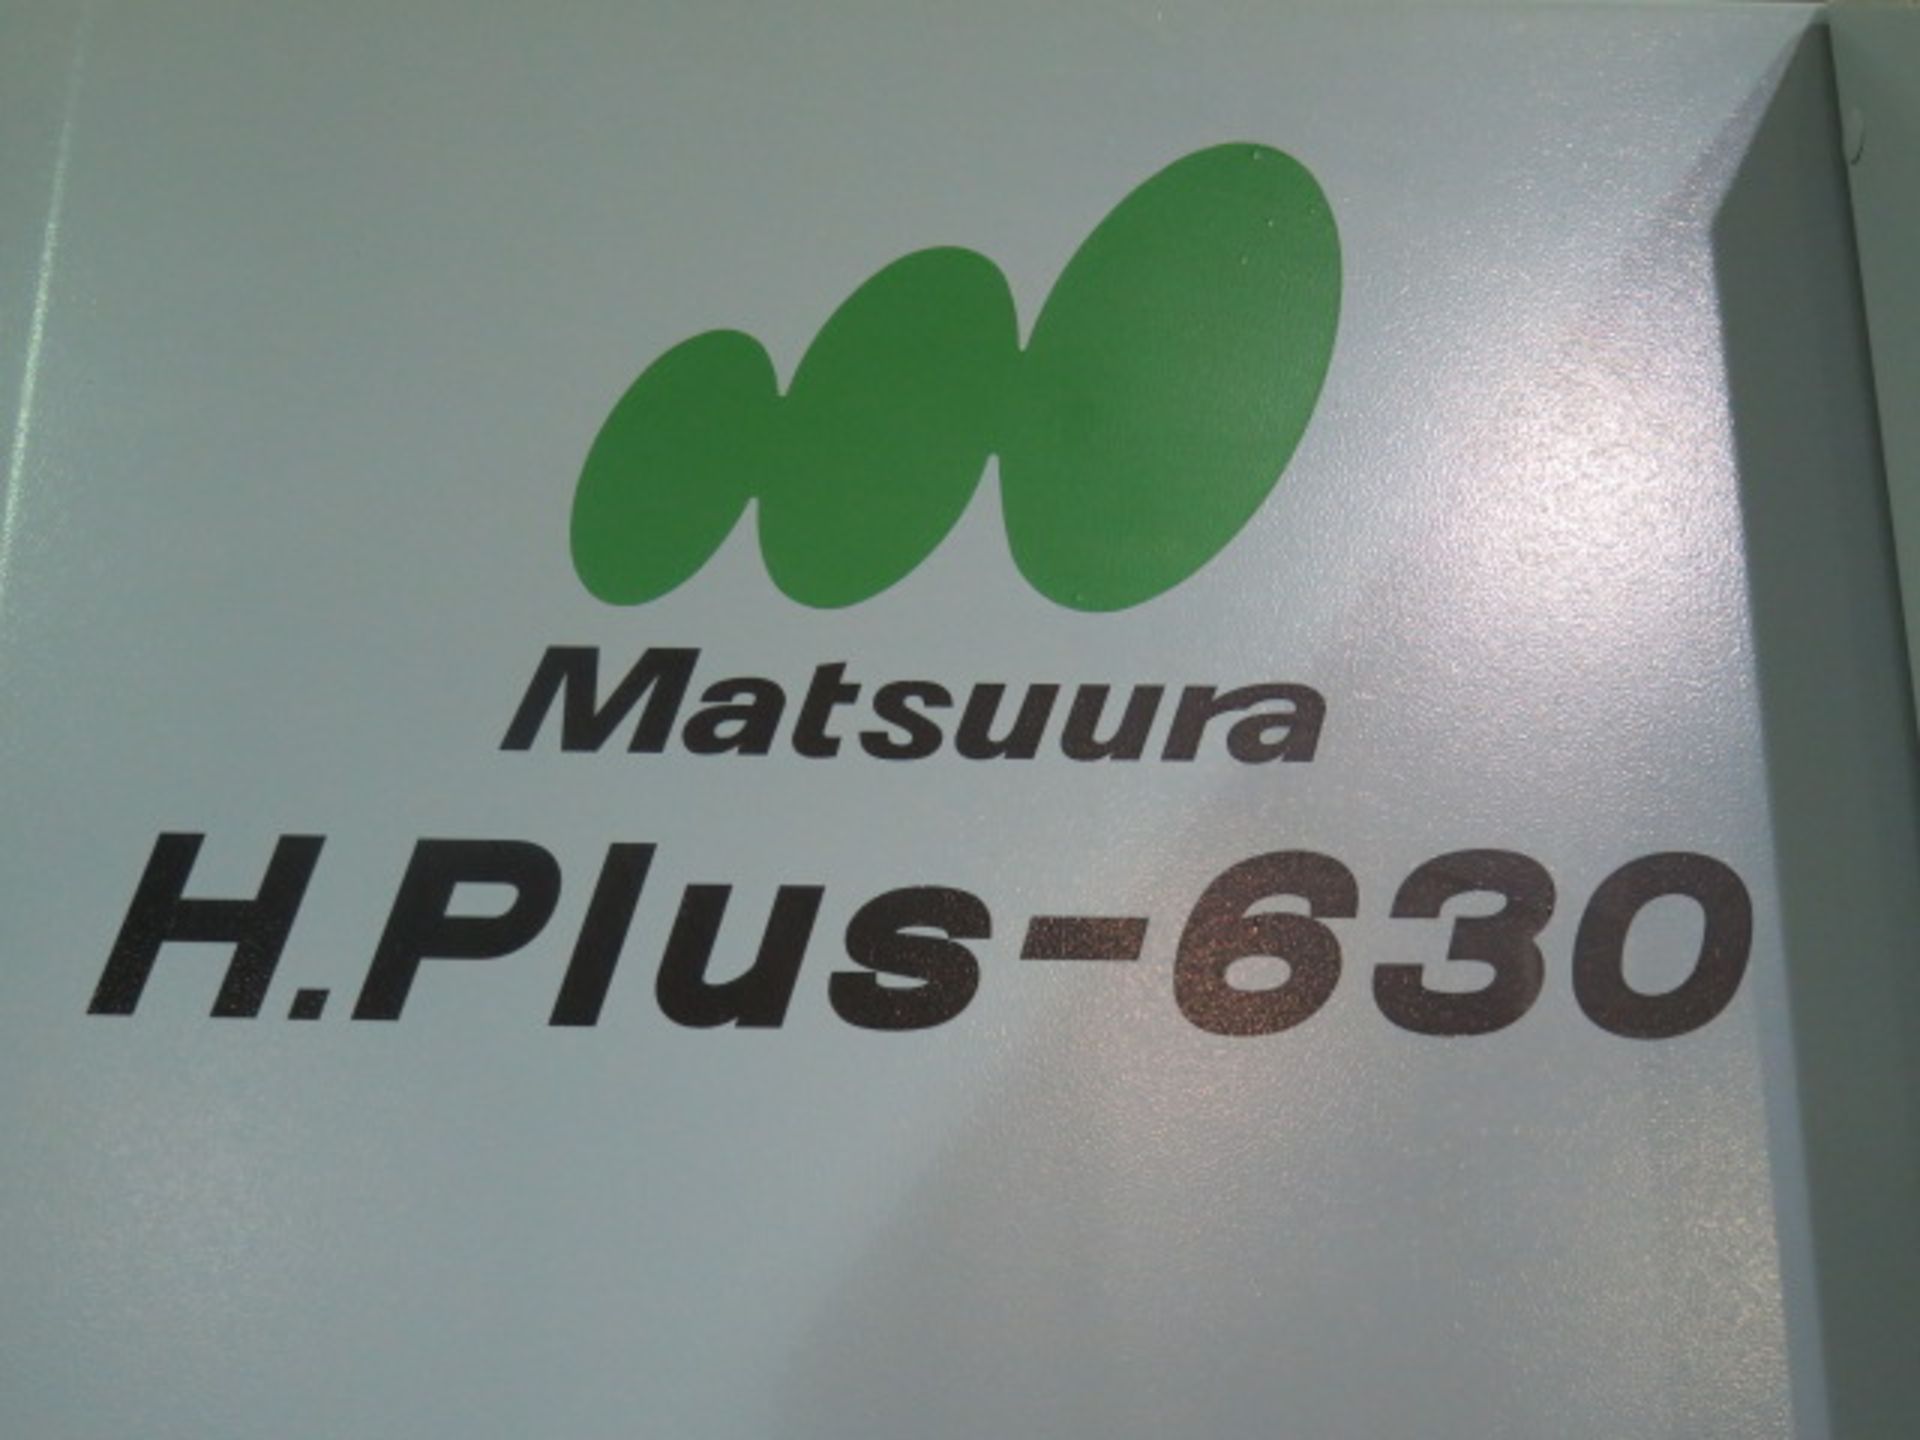 2005 Matsuura H.Plus-630 2-Pallet 4-Axis CNC HMC, Matsuura G-Tech 30I Control, s/n 16131 SOLD AS IS - Image 32 of 32